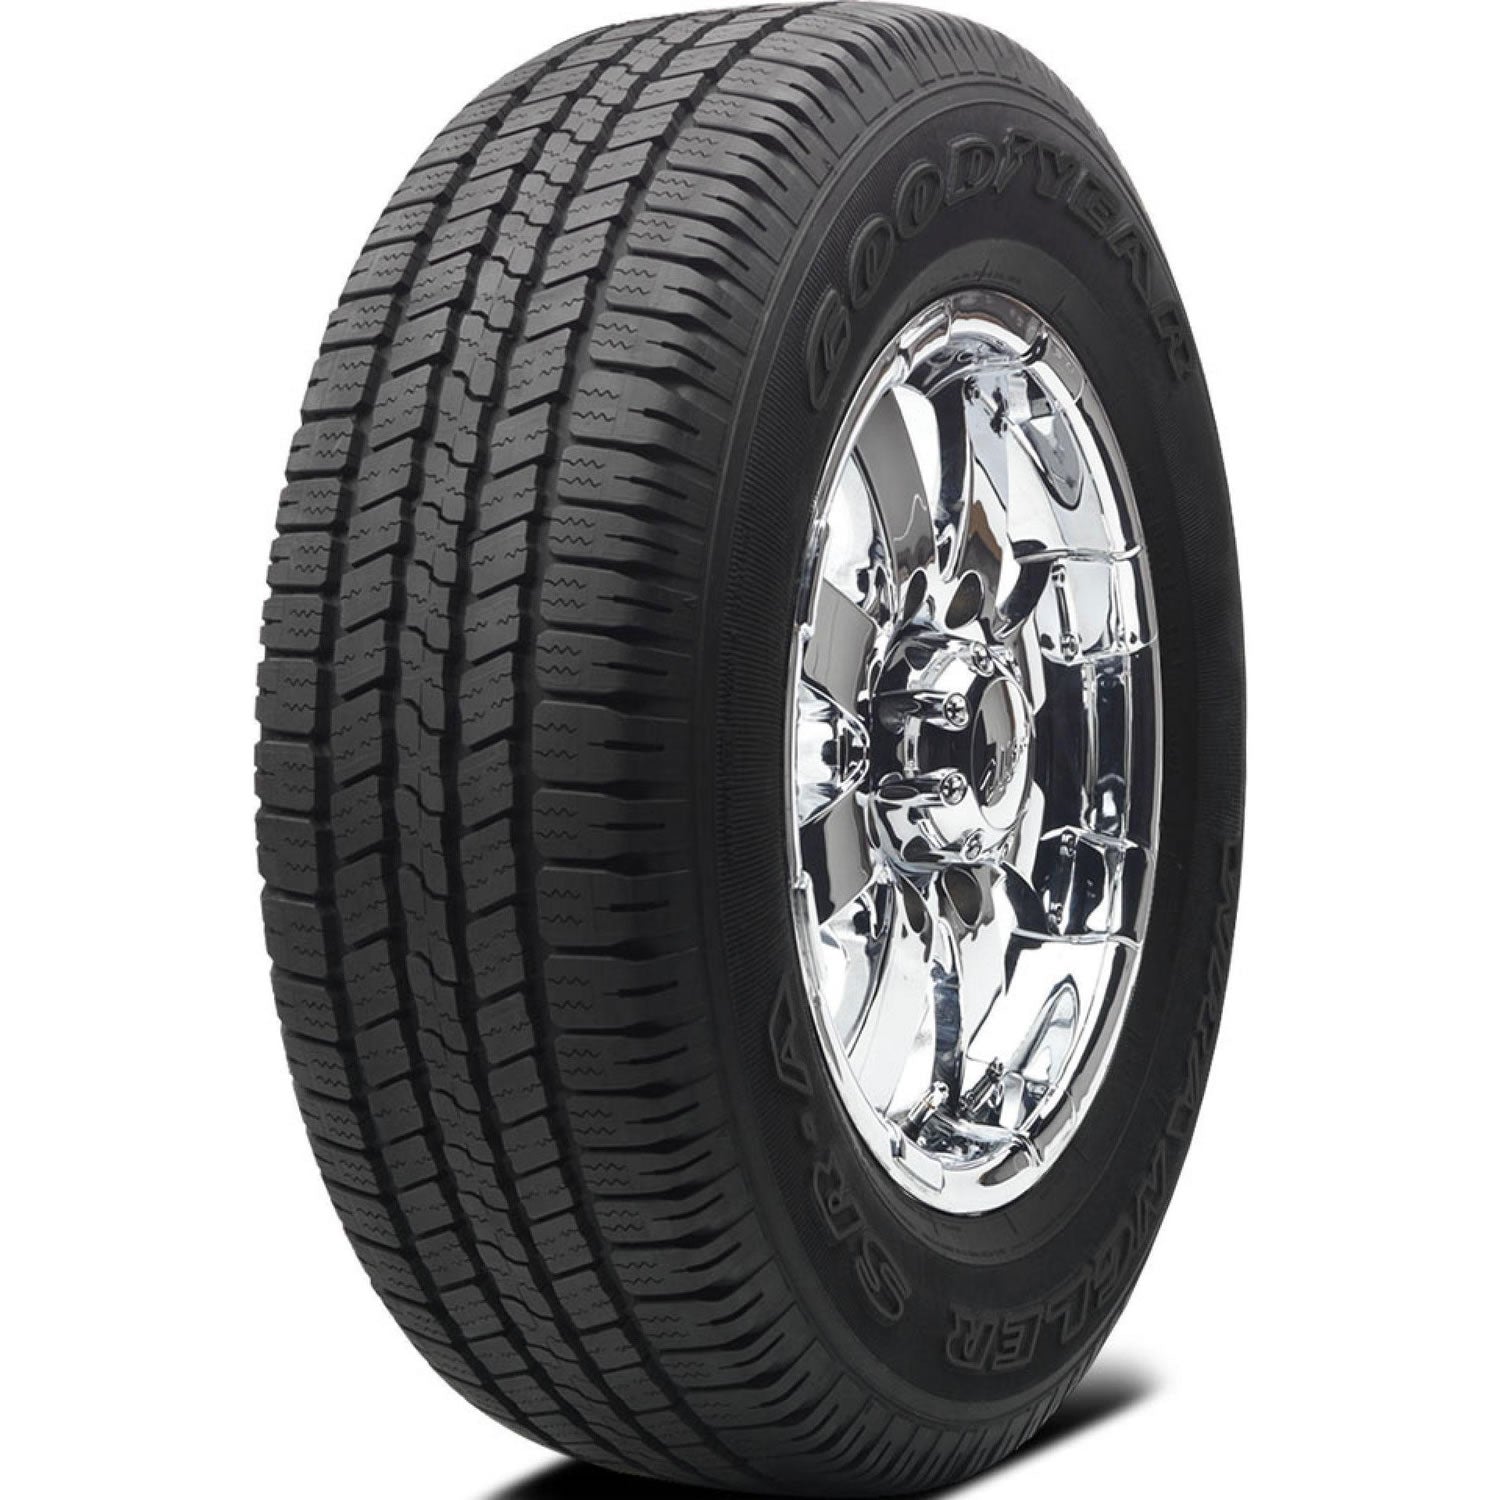 GOODYEAR WRANGLER SR-A P265/70R17 (31.7X10.7R 17) Tires